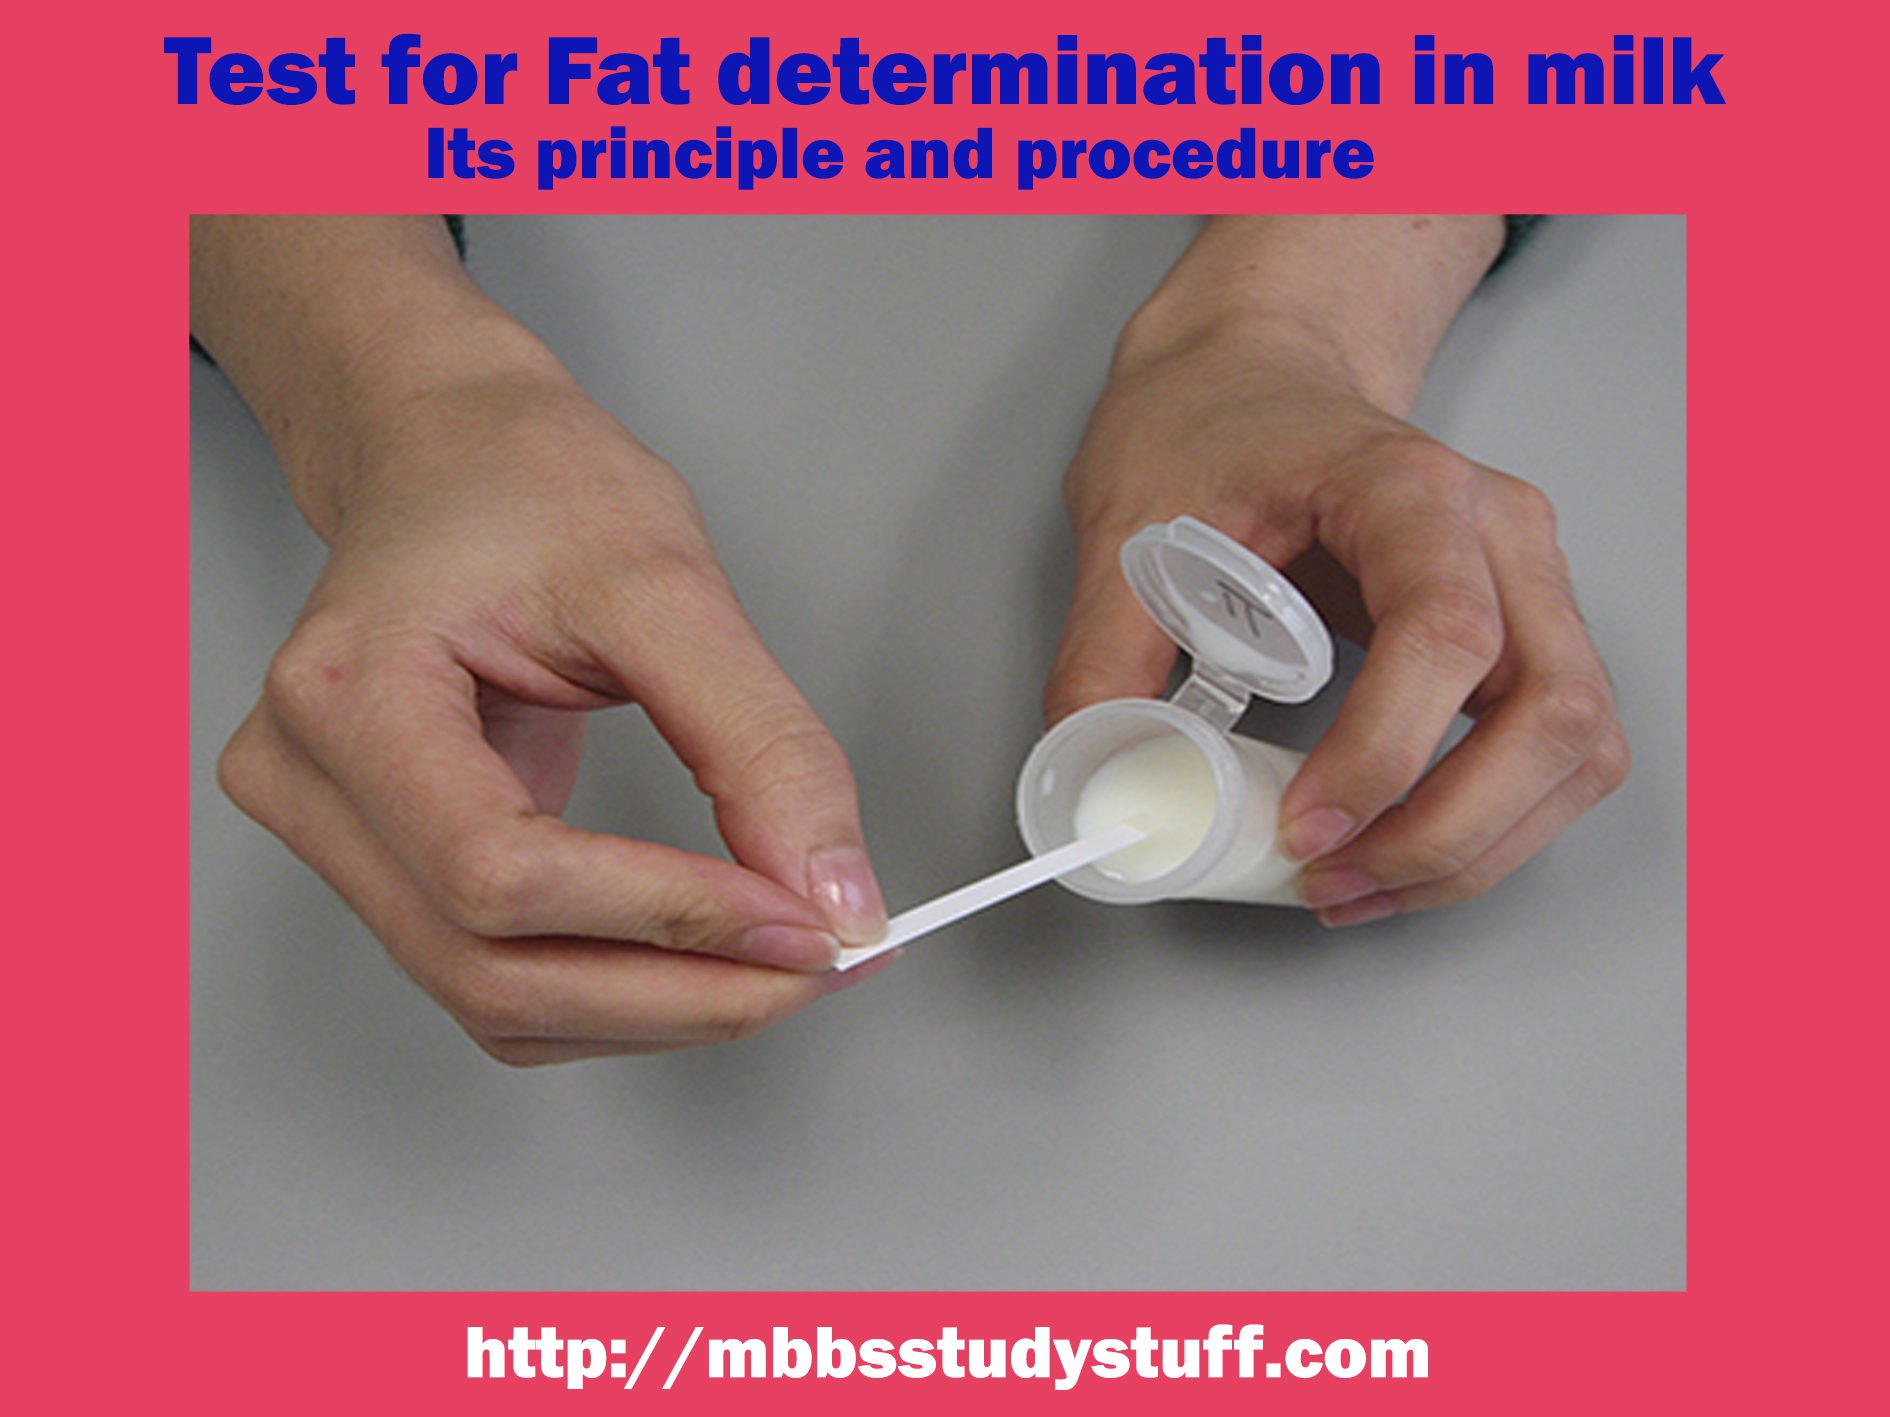 Fat determination in milk - Its principle and procedure